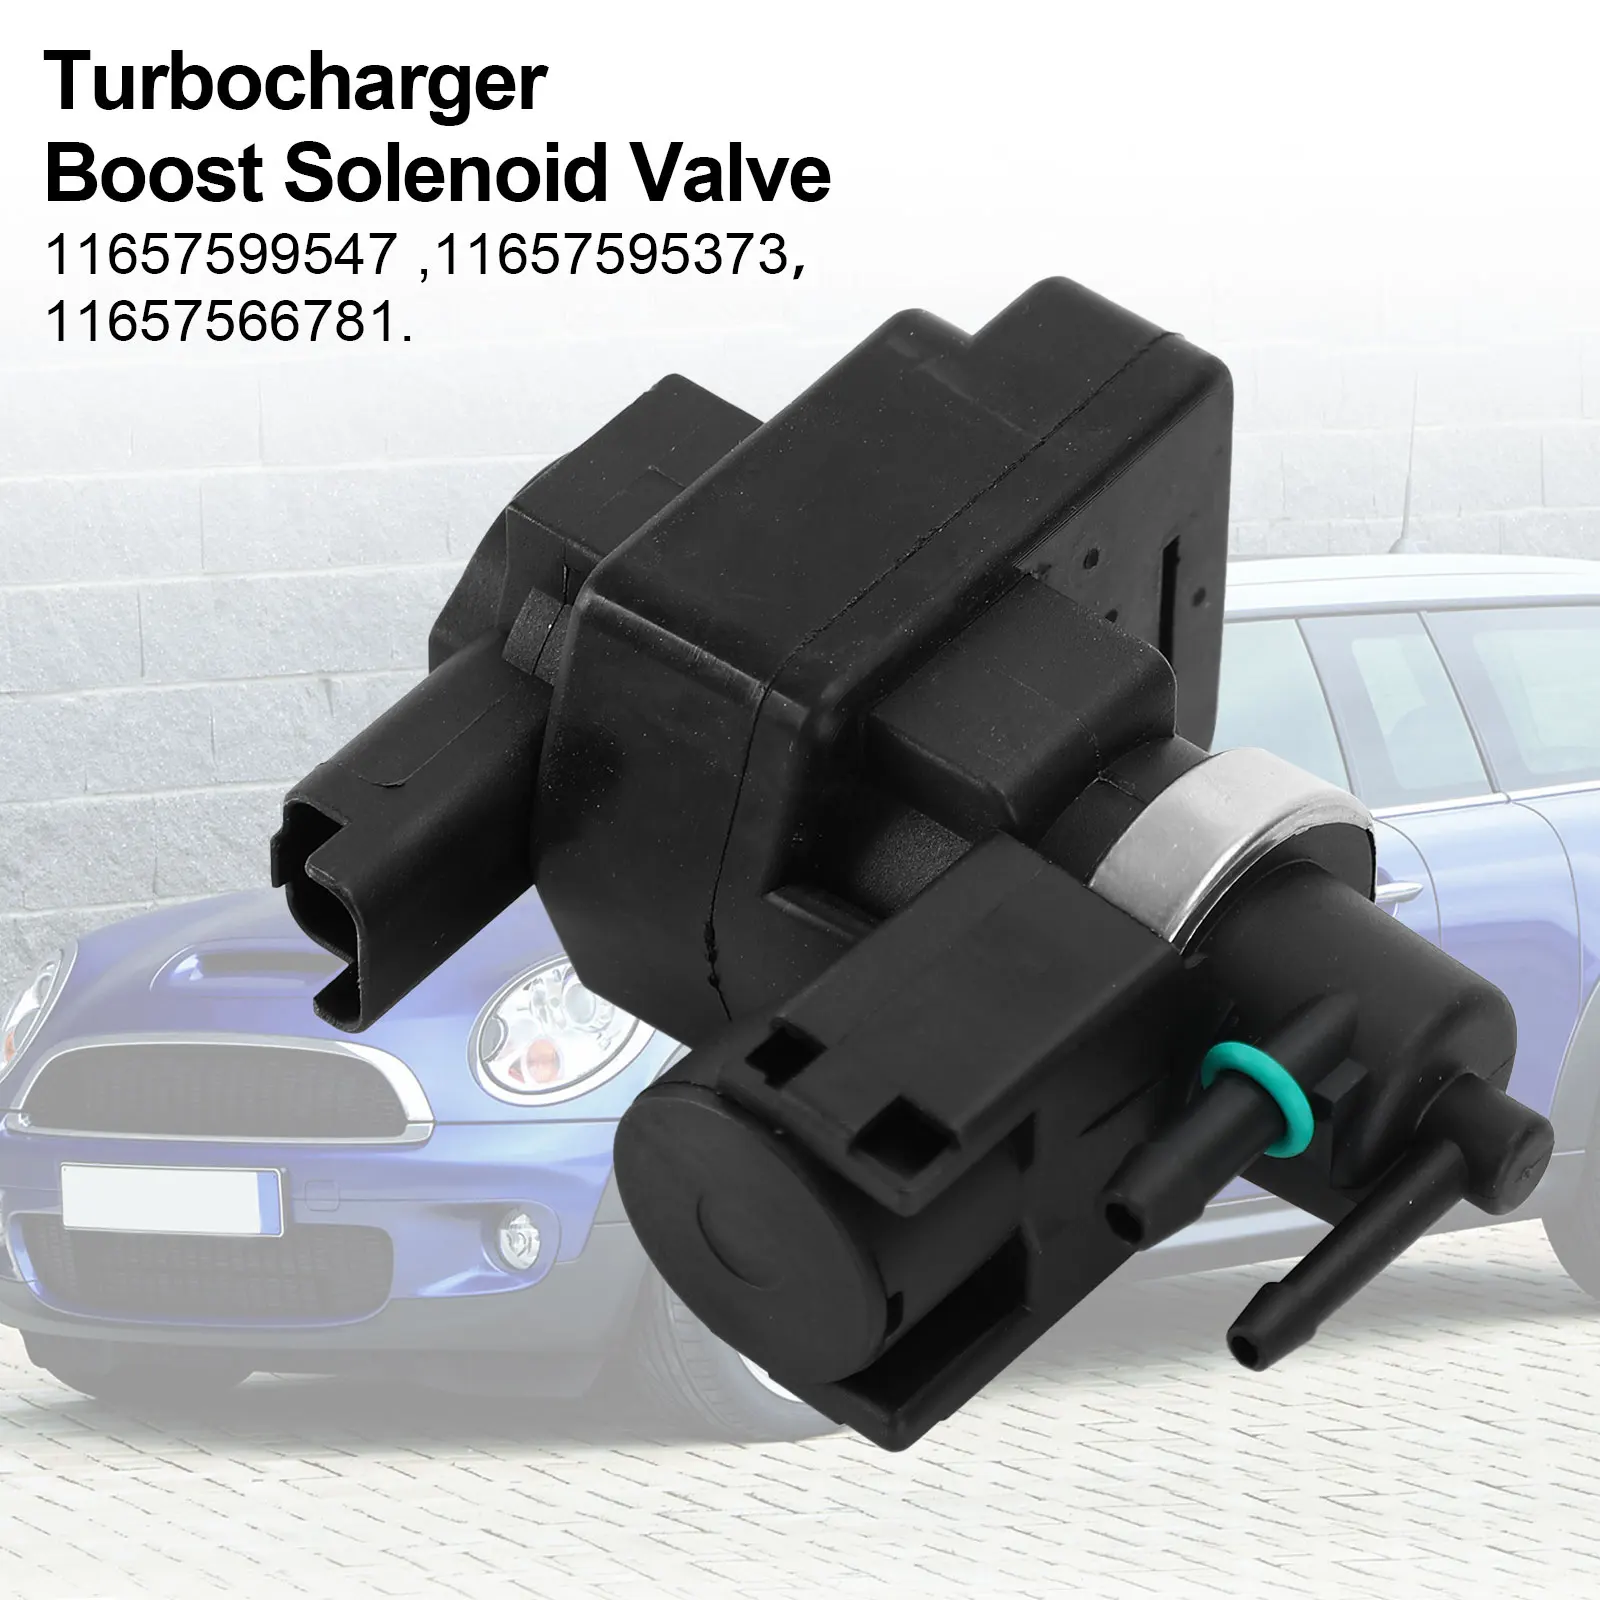 

Artudatech Turbocharger Boost Solenoid Valve For Mini Cooper R56 55 57 58 59 60 11657599547 Car Accessories